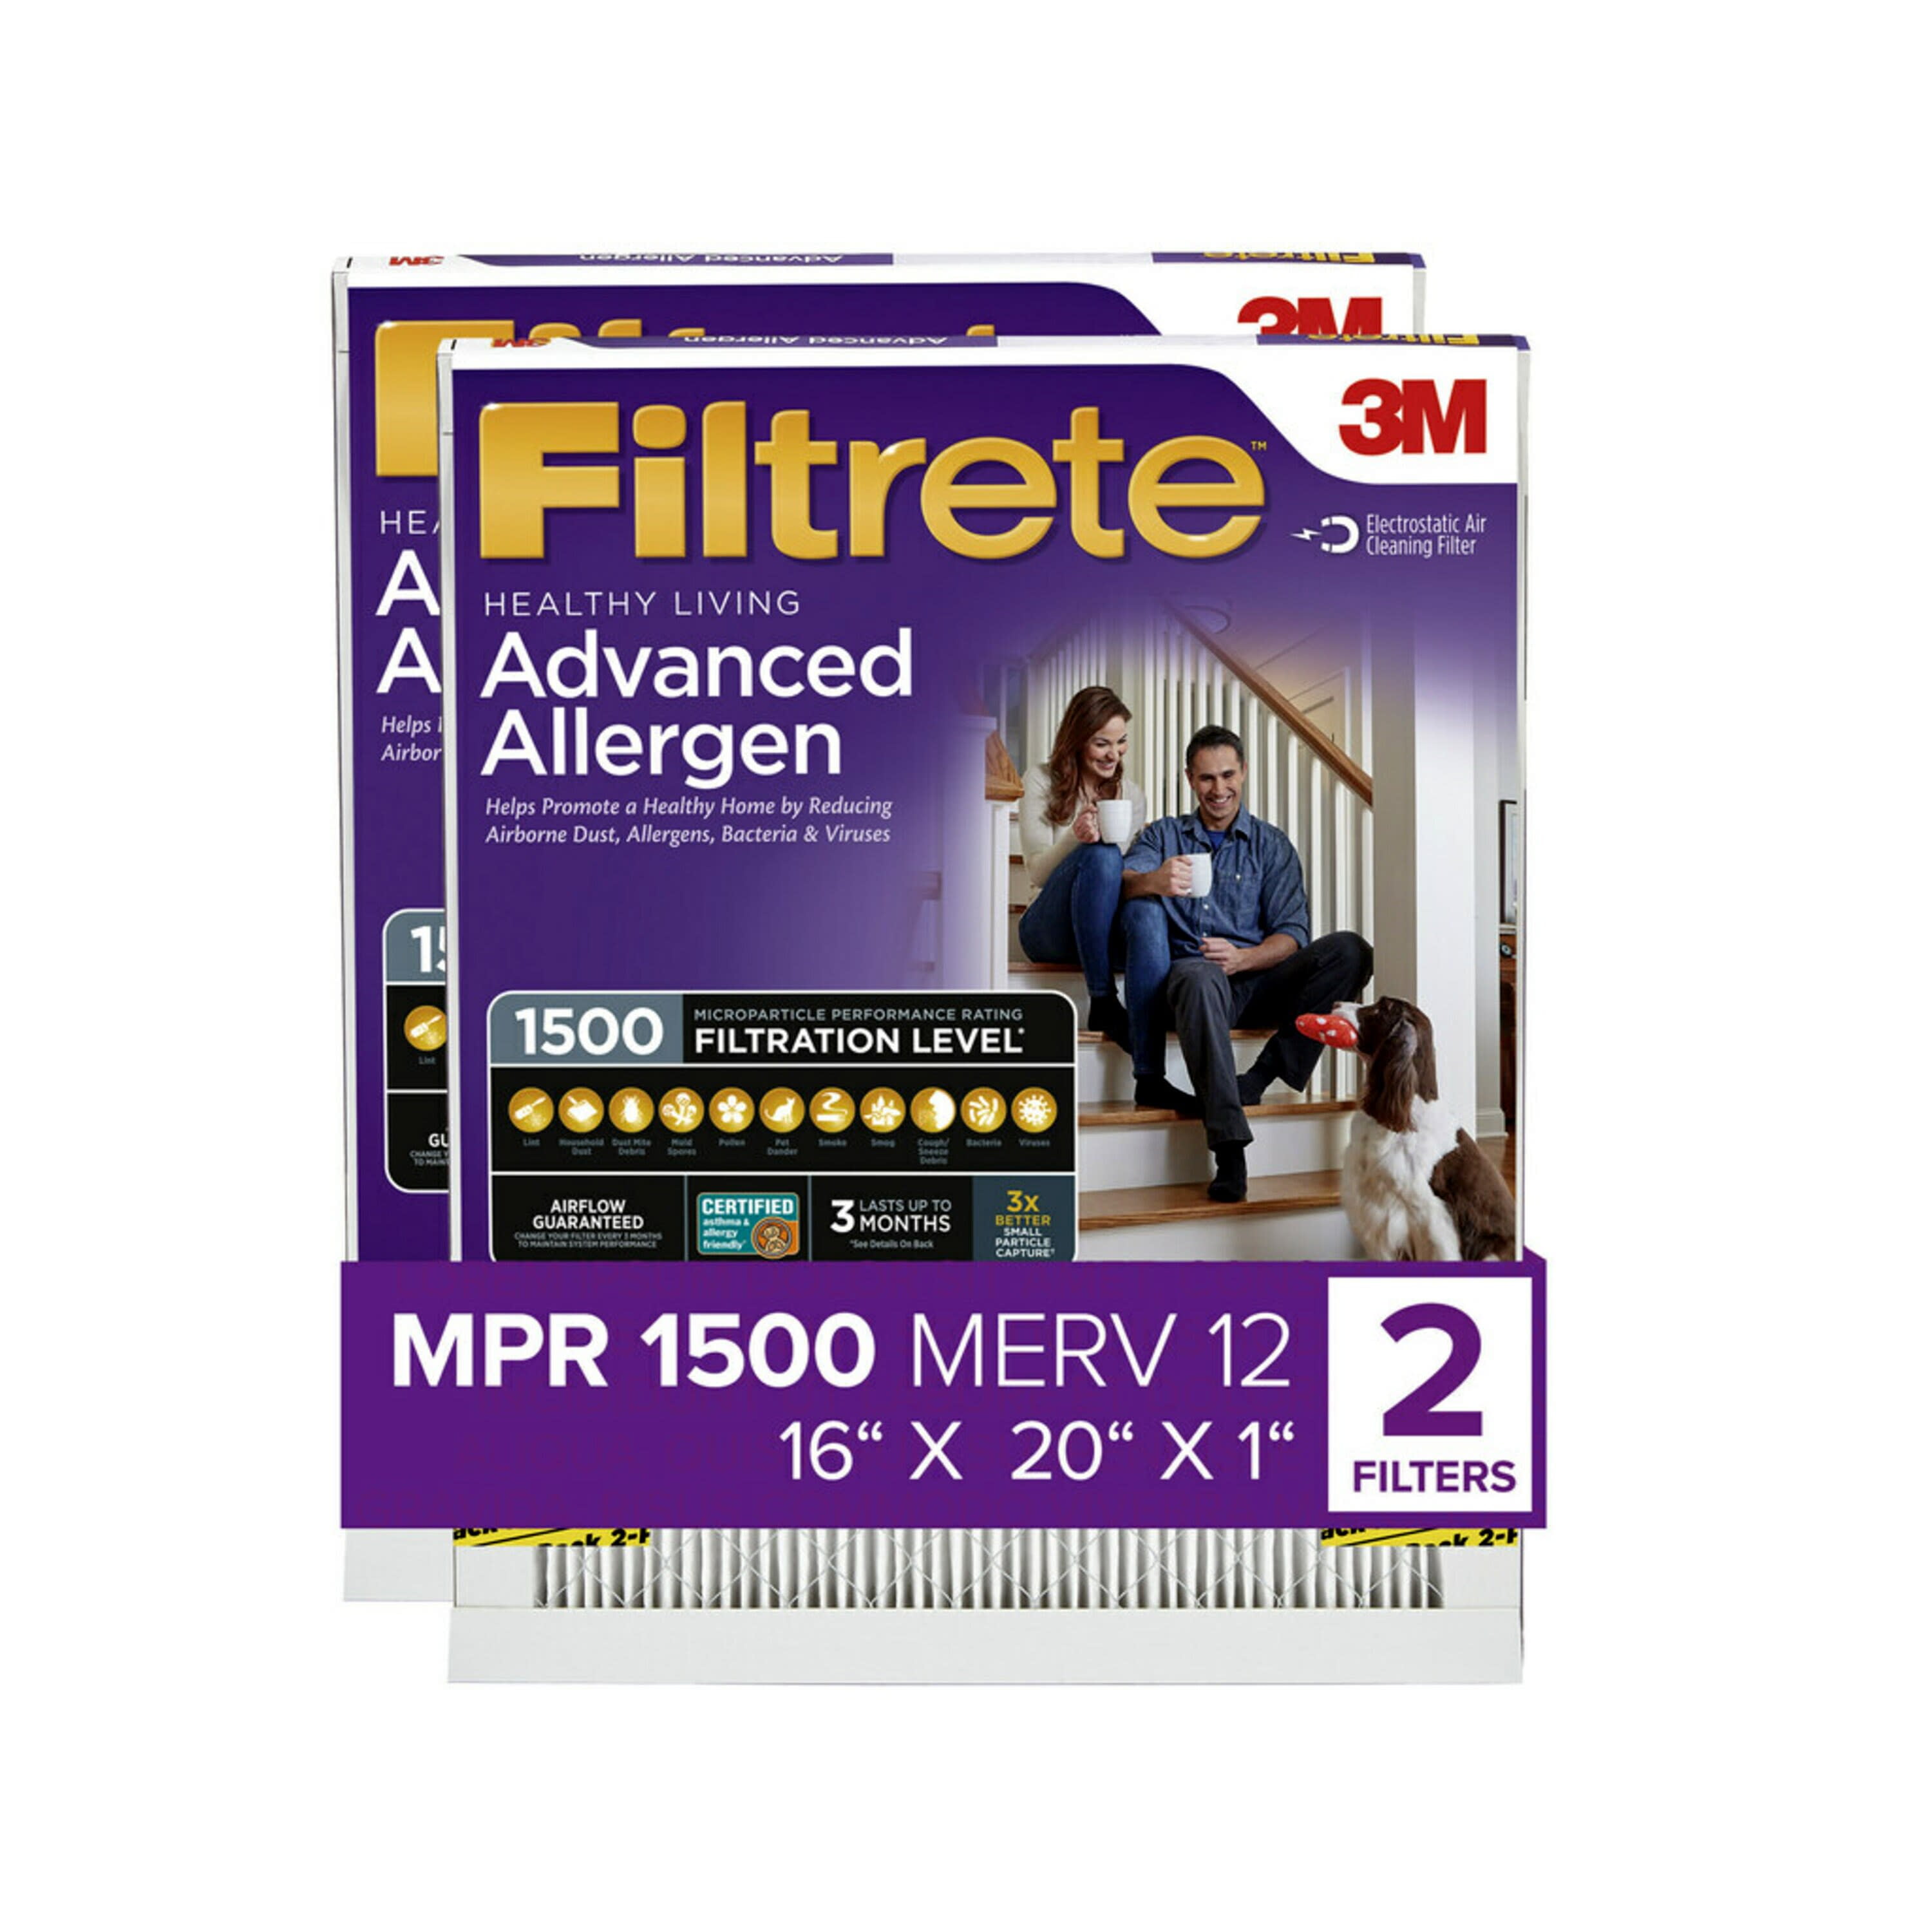 Filtrete by 3M, 16x20x1, MERV 12, Advanced Allergen Reduction HVAC Furnace Air Filter, Captures Allergens, Bacteria, Viruses, 1500 MPR, 2 Filters